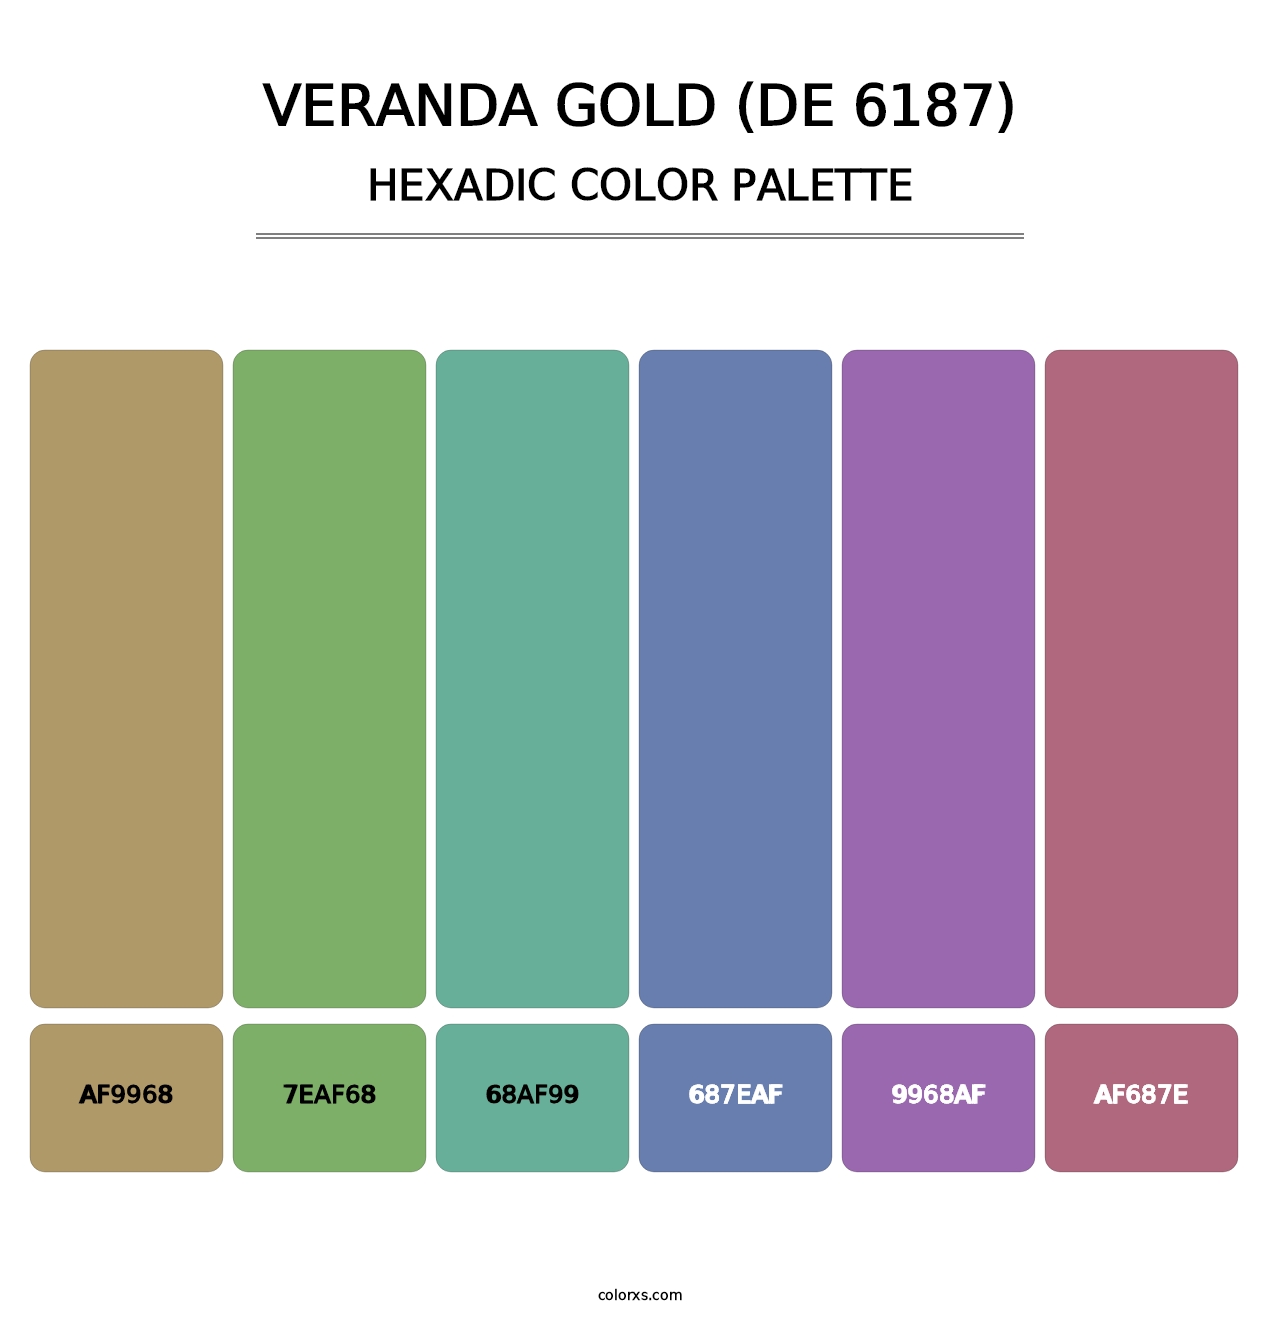 Veranda Gold (DE 6187) - Hexadic Color Palette